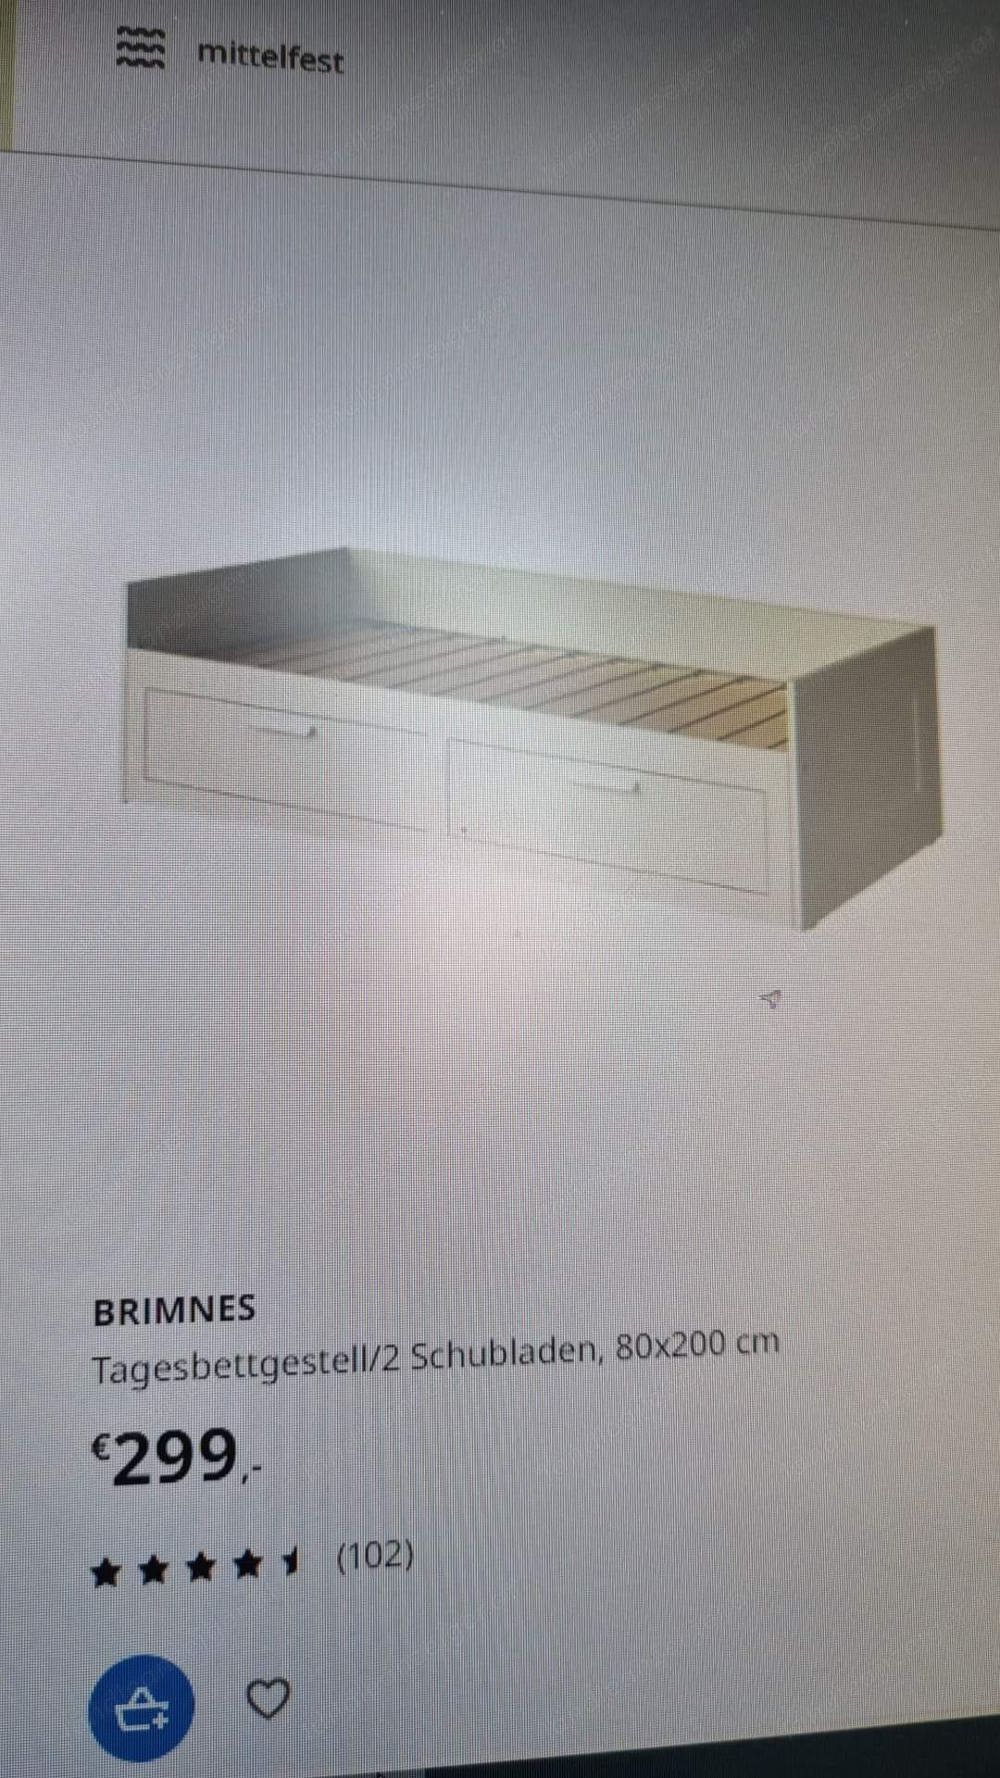 Ikea Brimnes Bett